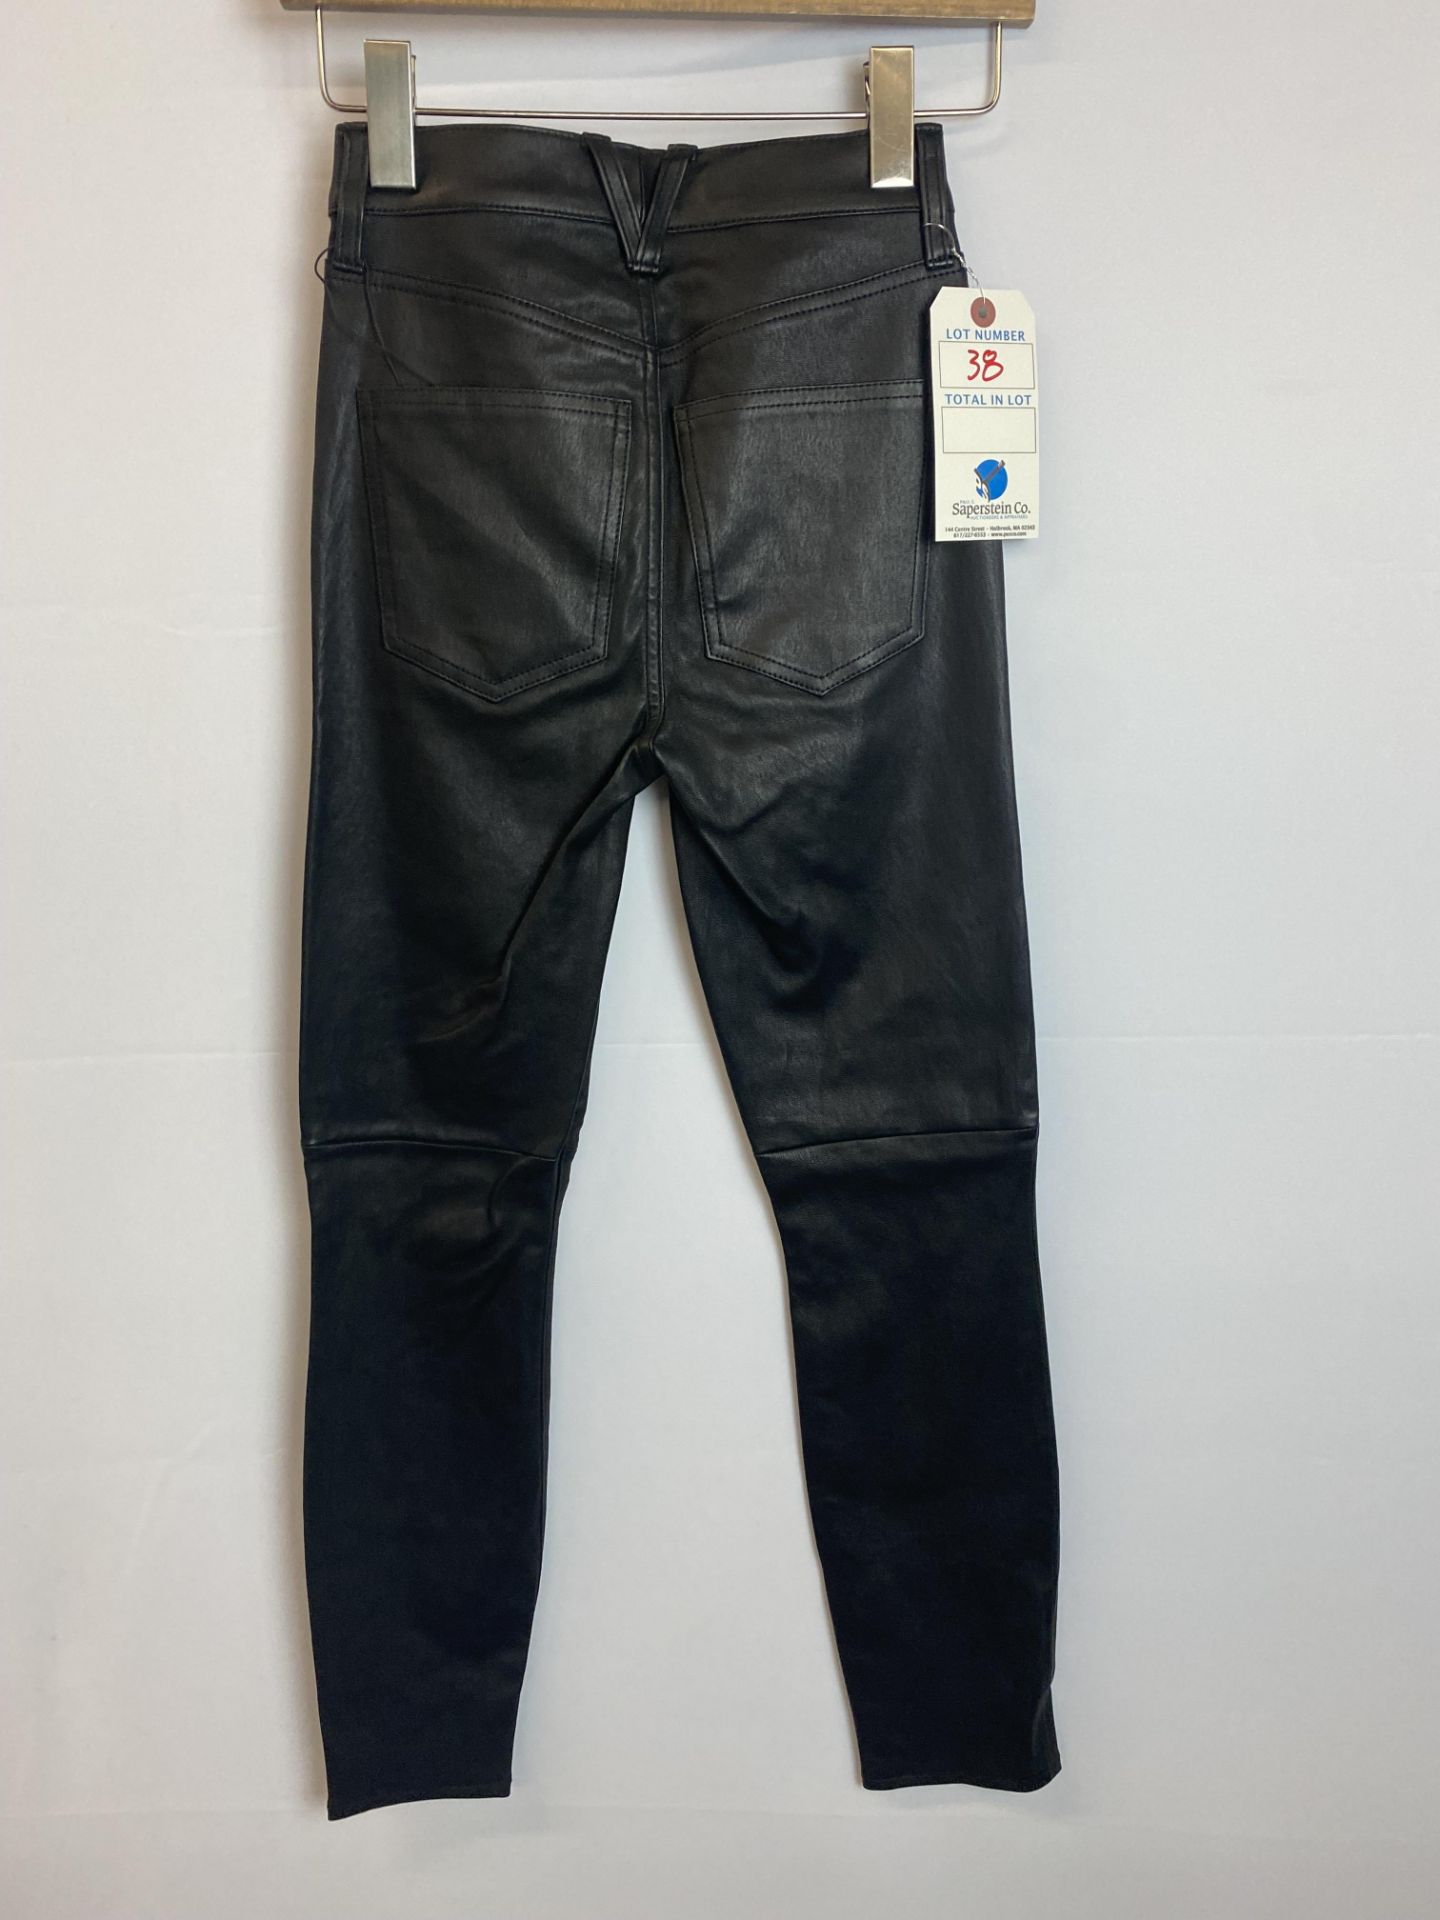 Veronica Beard Jeans Black Debbie "Leather", Size 25, Original Retail Price: $1095 - Bild 2 aus 4